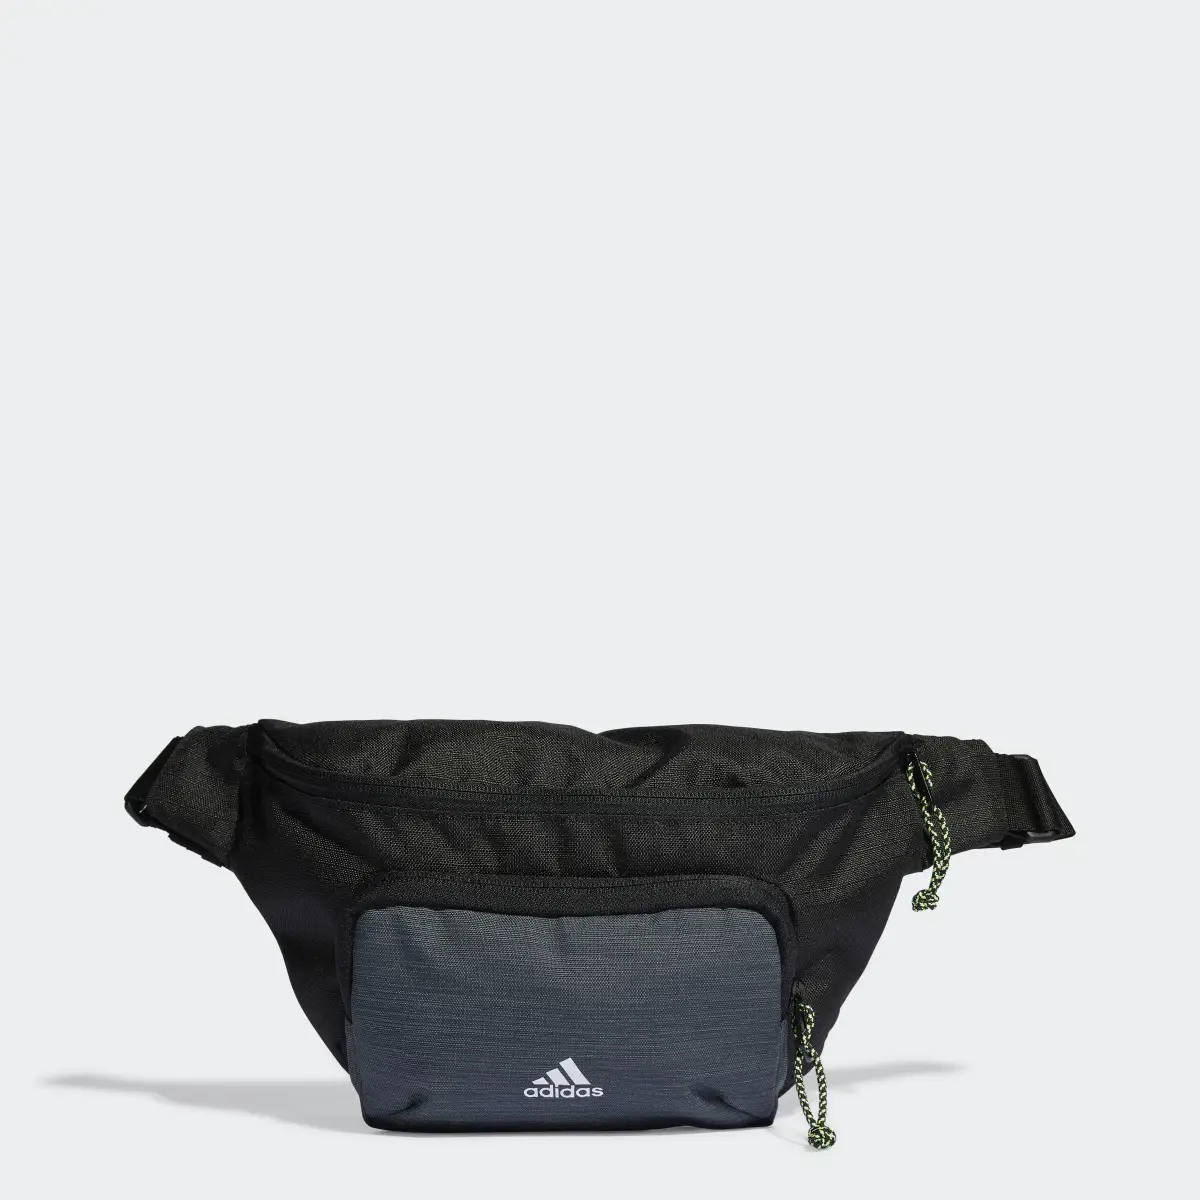 Adidas X_PLR Bum Bag. 1